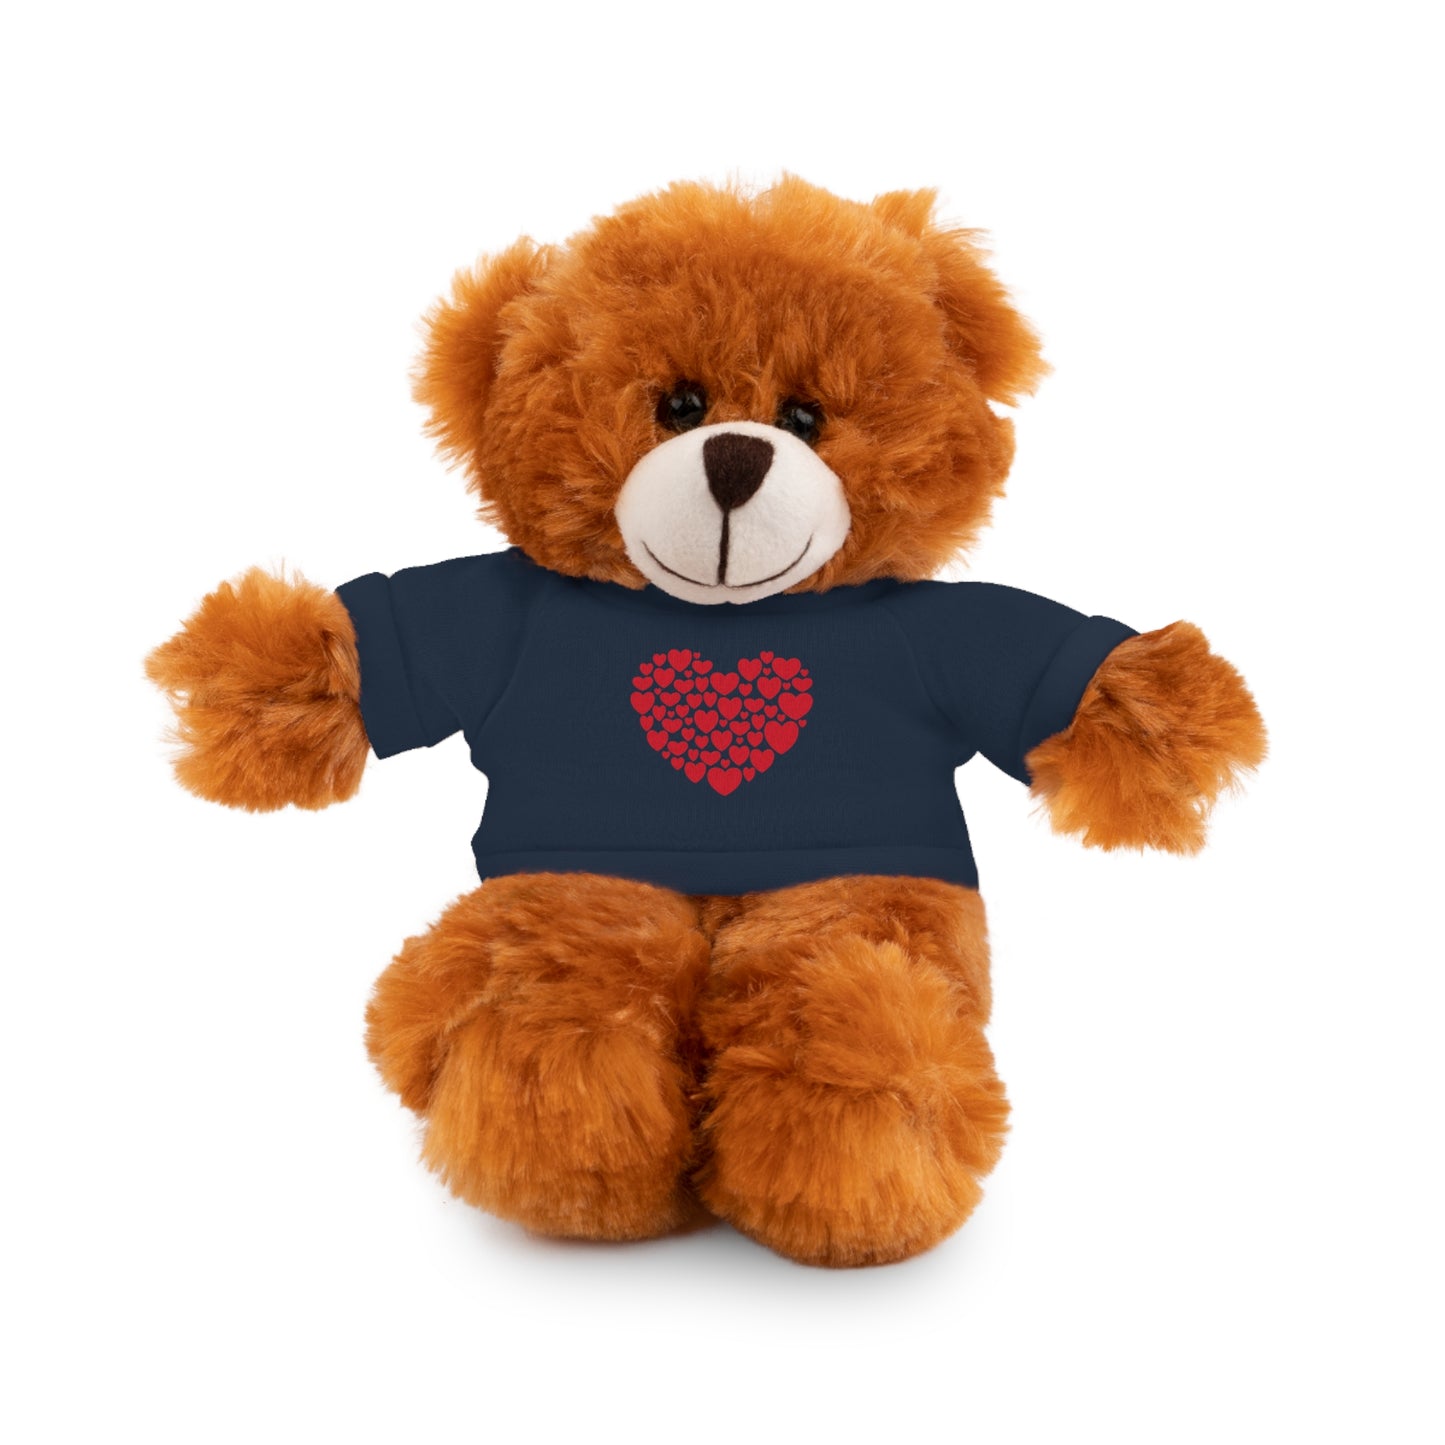 Stuffed Animals with Heart T-shirt